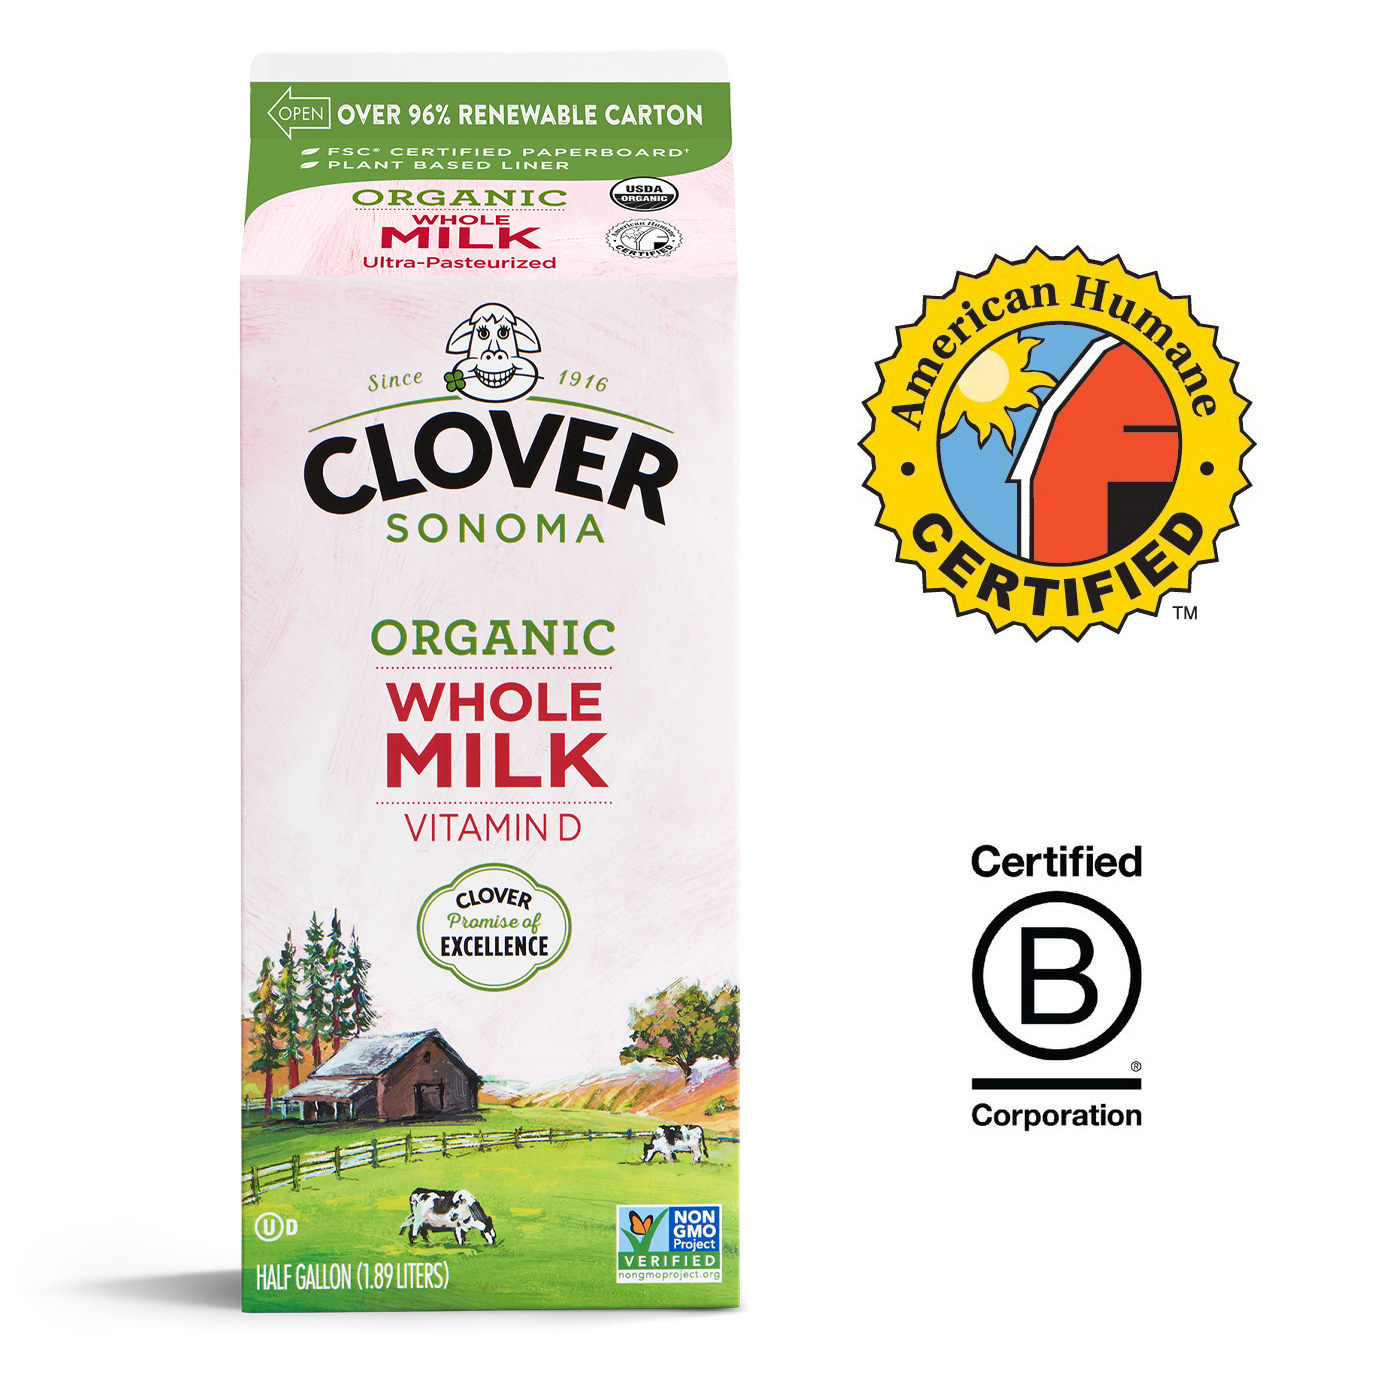 Organic whole milk carton